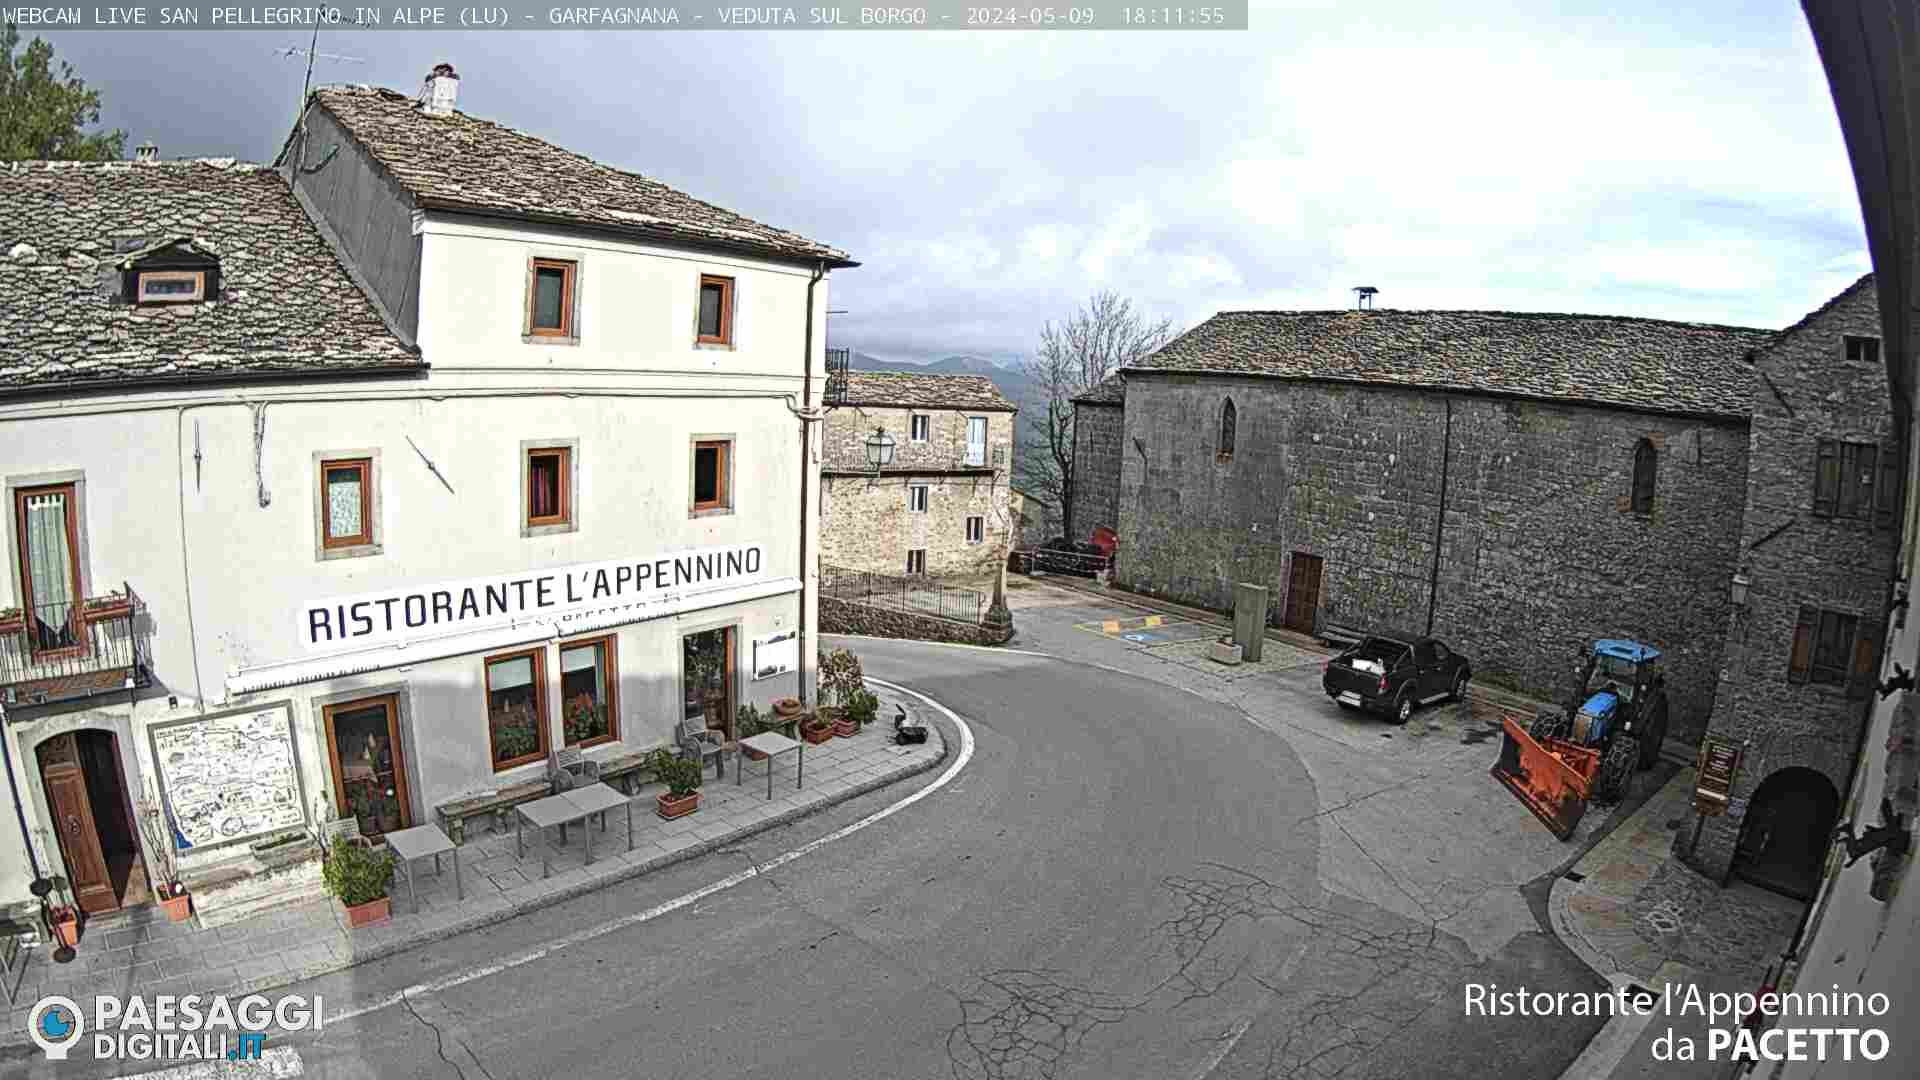 San Pellegrino in Alpe (LU) – Garfagnana